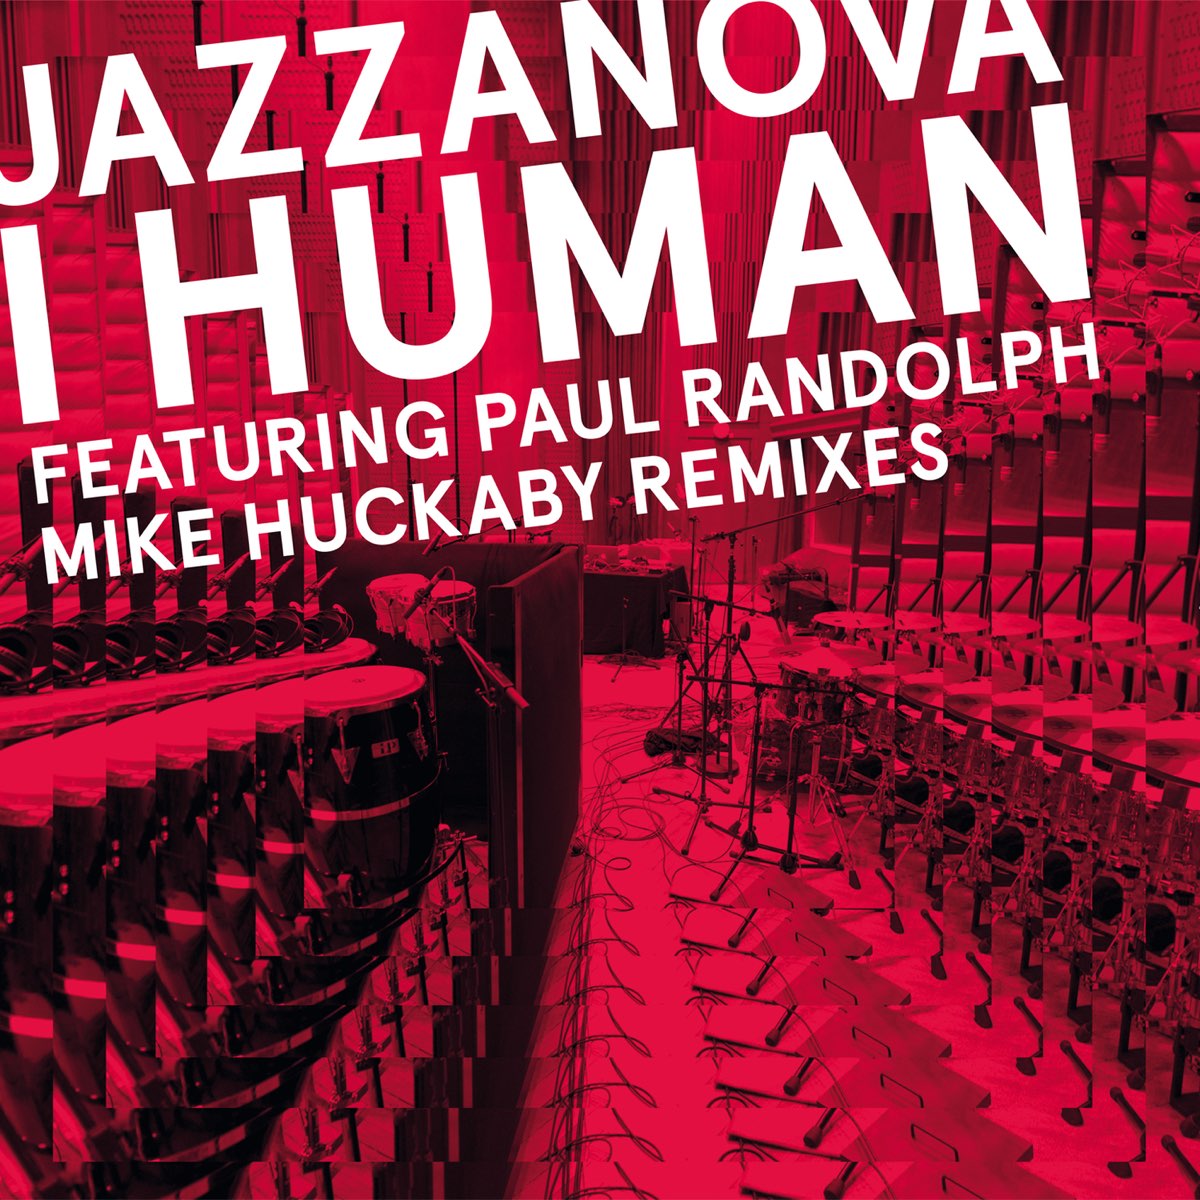 Jazzanova. Paul Randolph. Майк хуман. Jazzanova – Now there is we feat. Paul Randolph (Remixes). Human remix